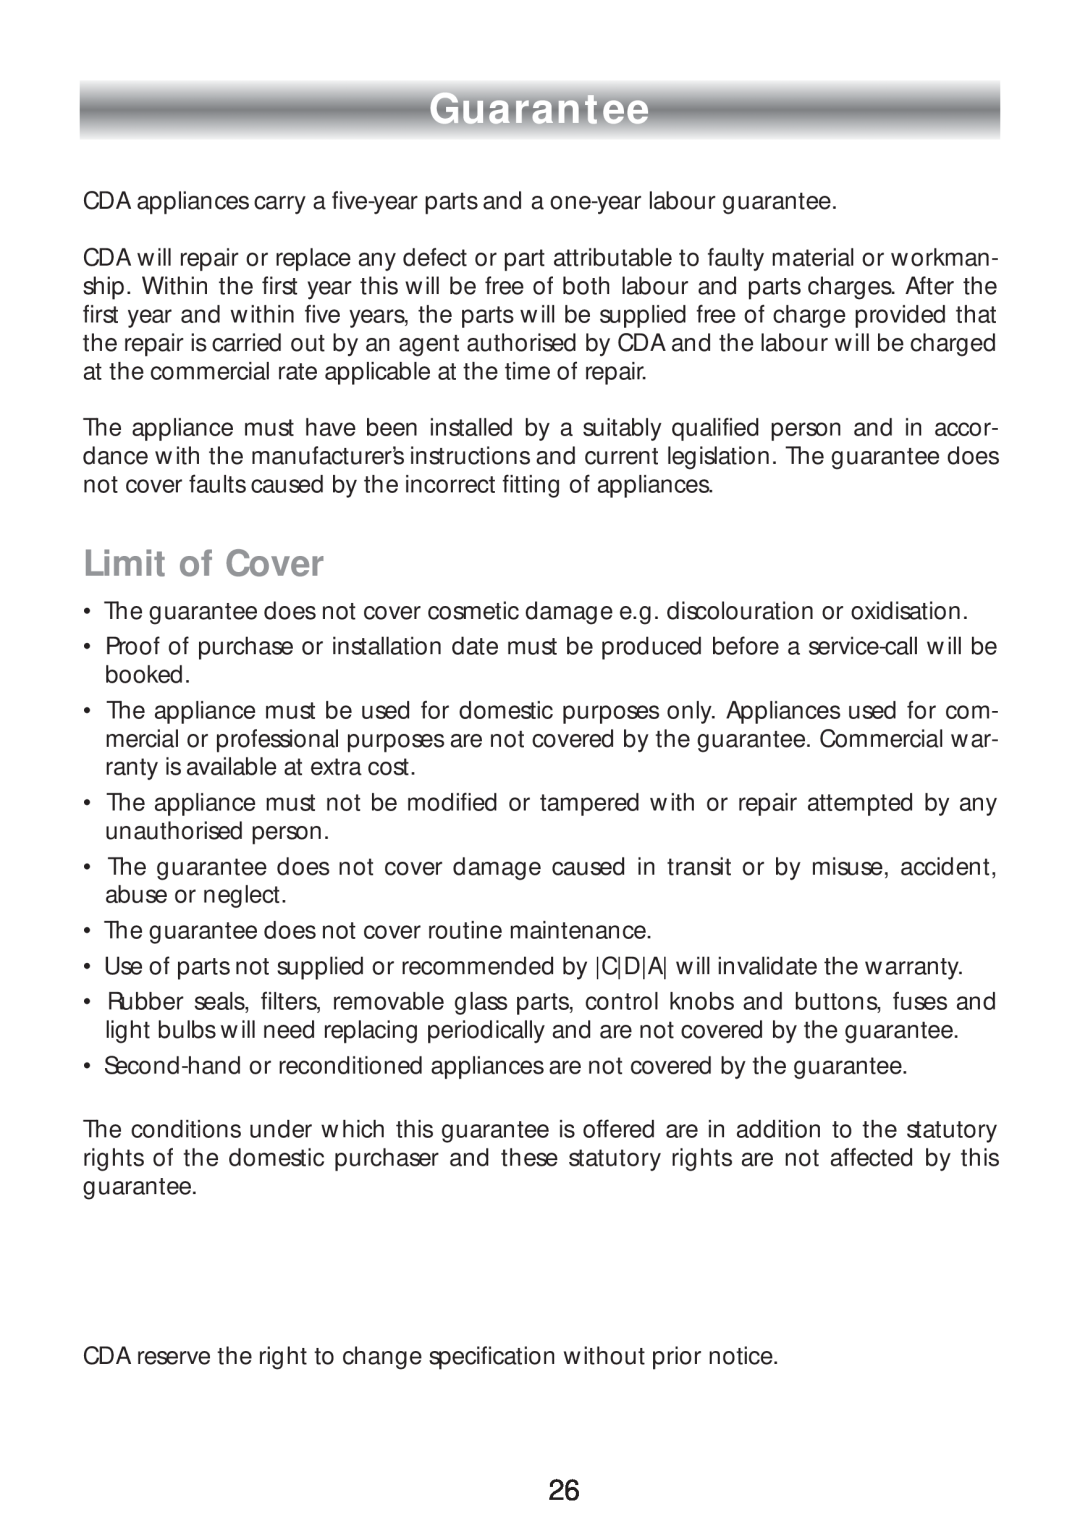 CDA SC309 manual Guarantee, Limit of Cover 